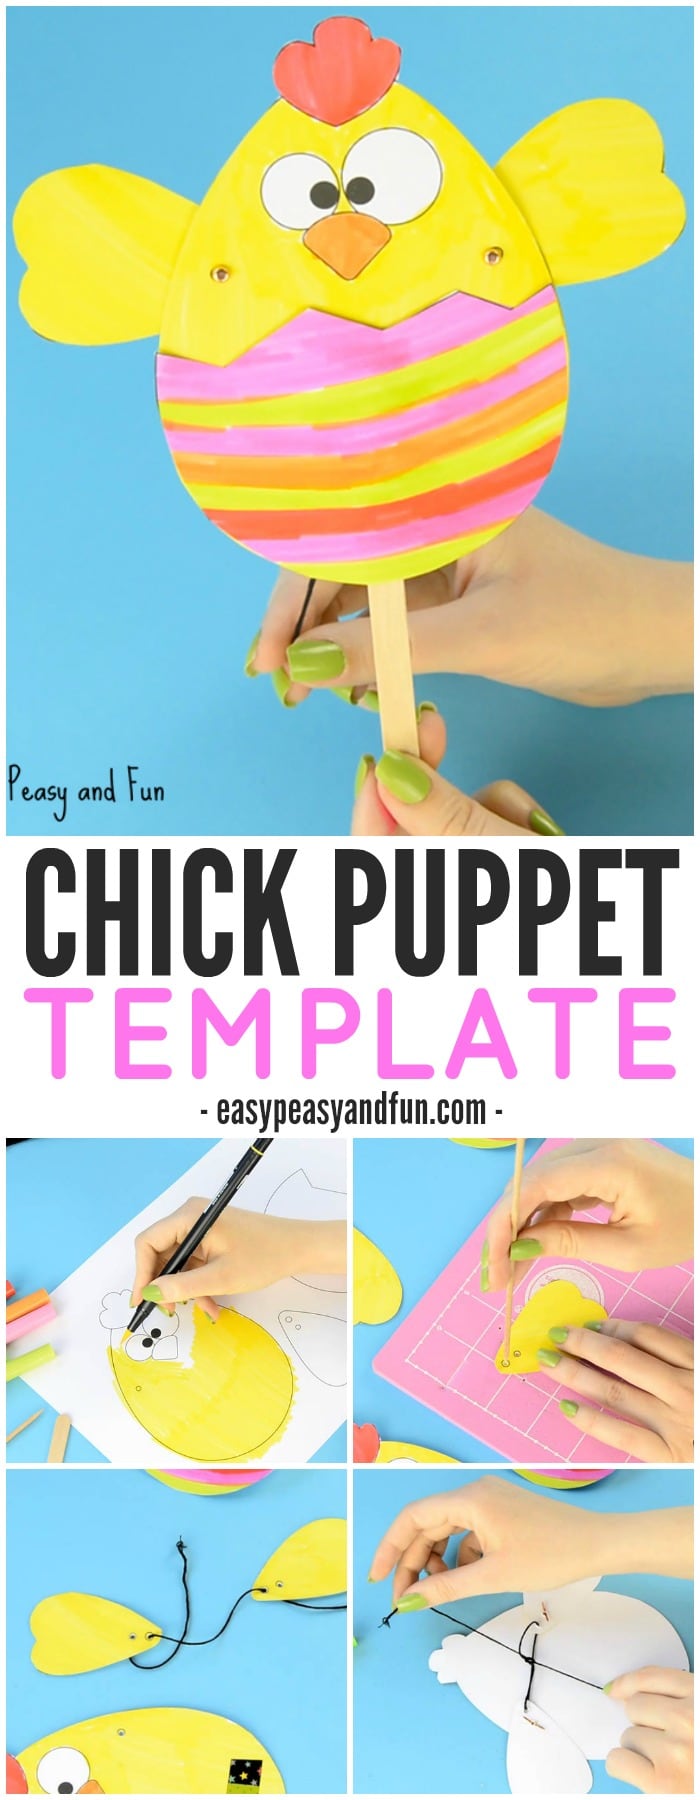 Paper Chick Puppet Craft Template – Fun Easter Idea